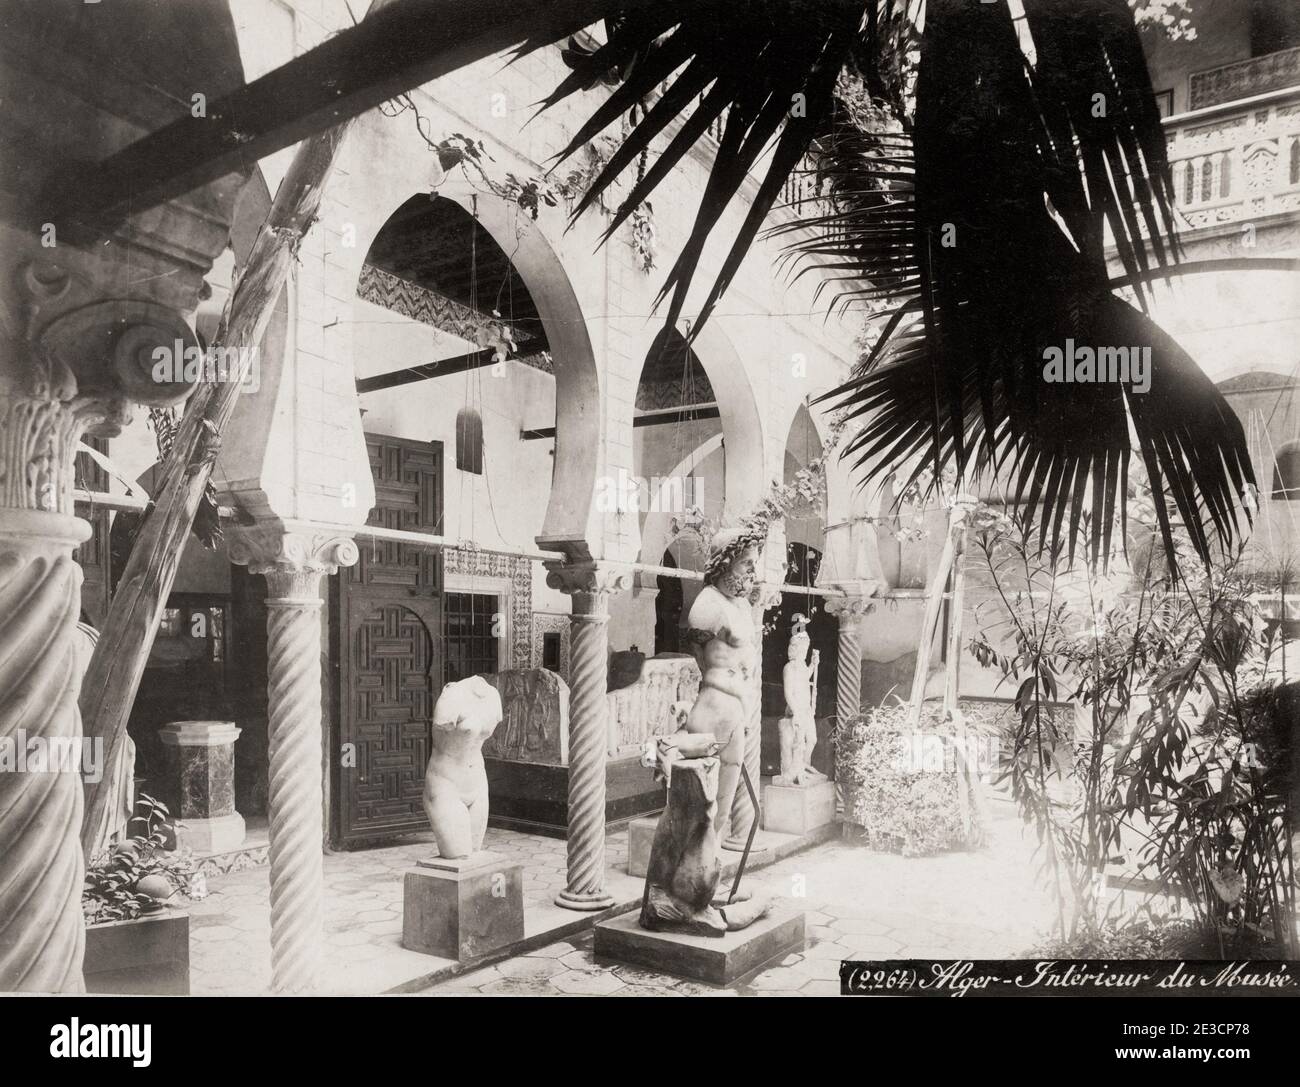 Vintage 19th century photograph: Museum interior, Algiers, Algeria. Stock Photo